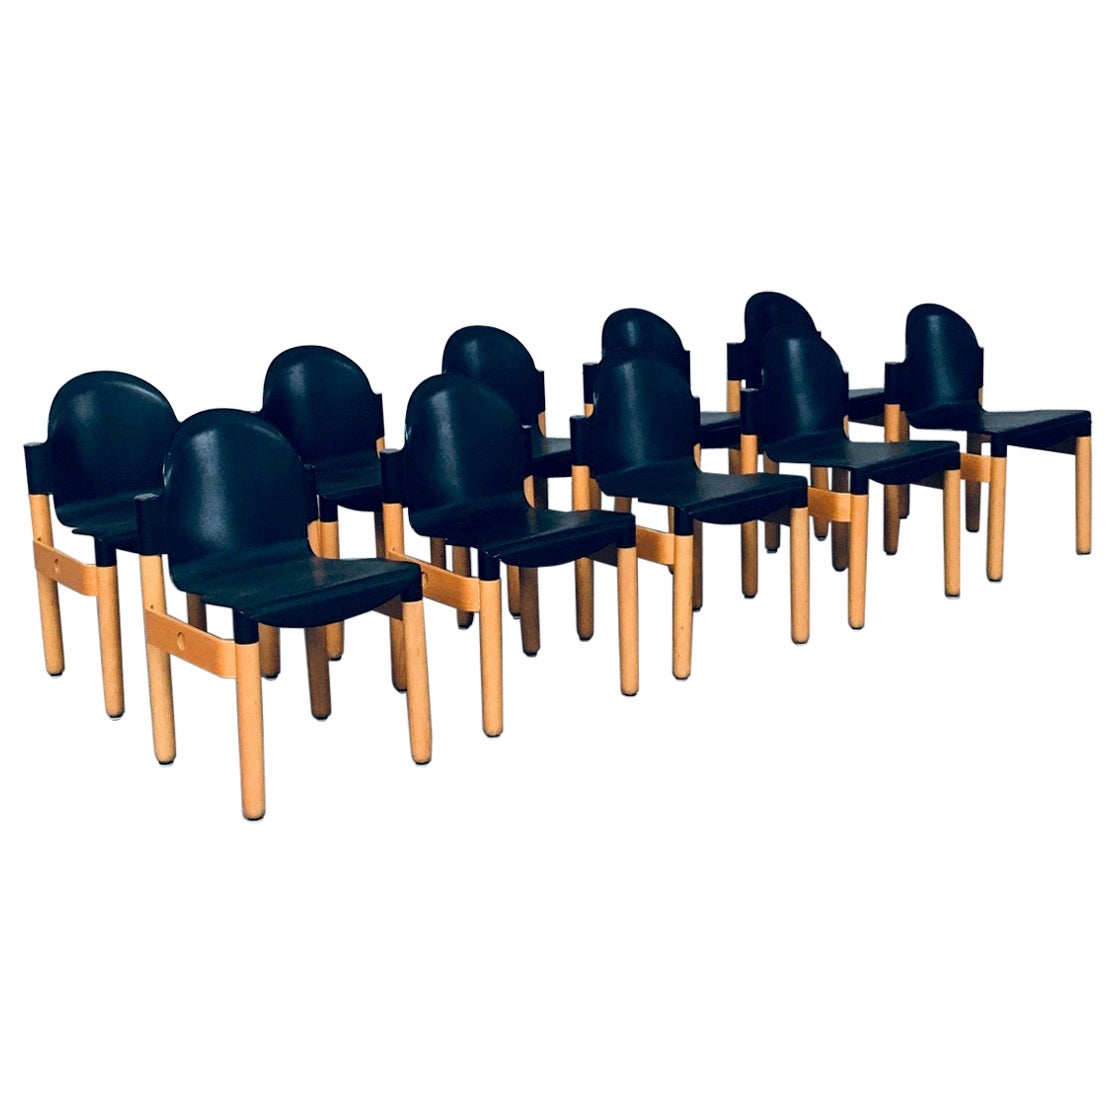 Postmodern Design Stacking Chair "FLEX 2000" by Gerd Lange for Thonet, 1983